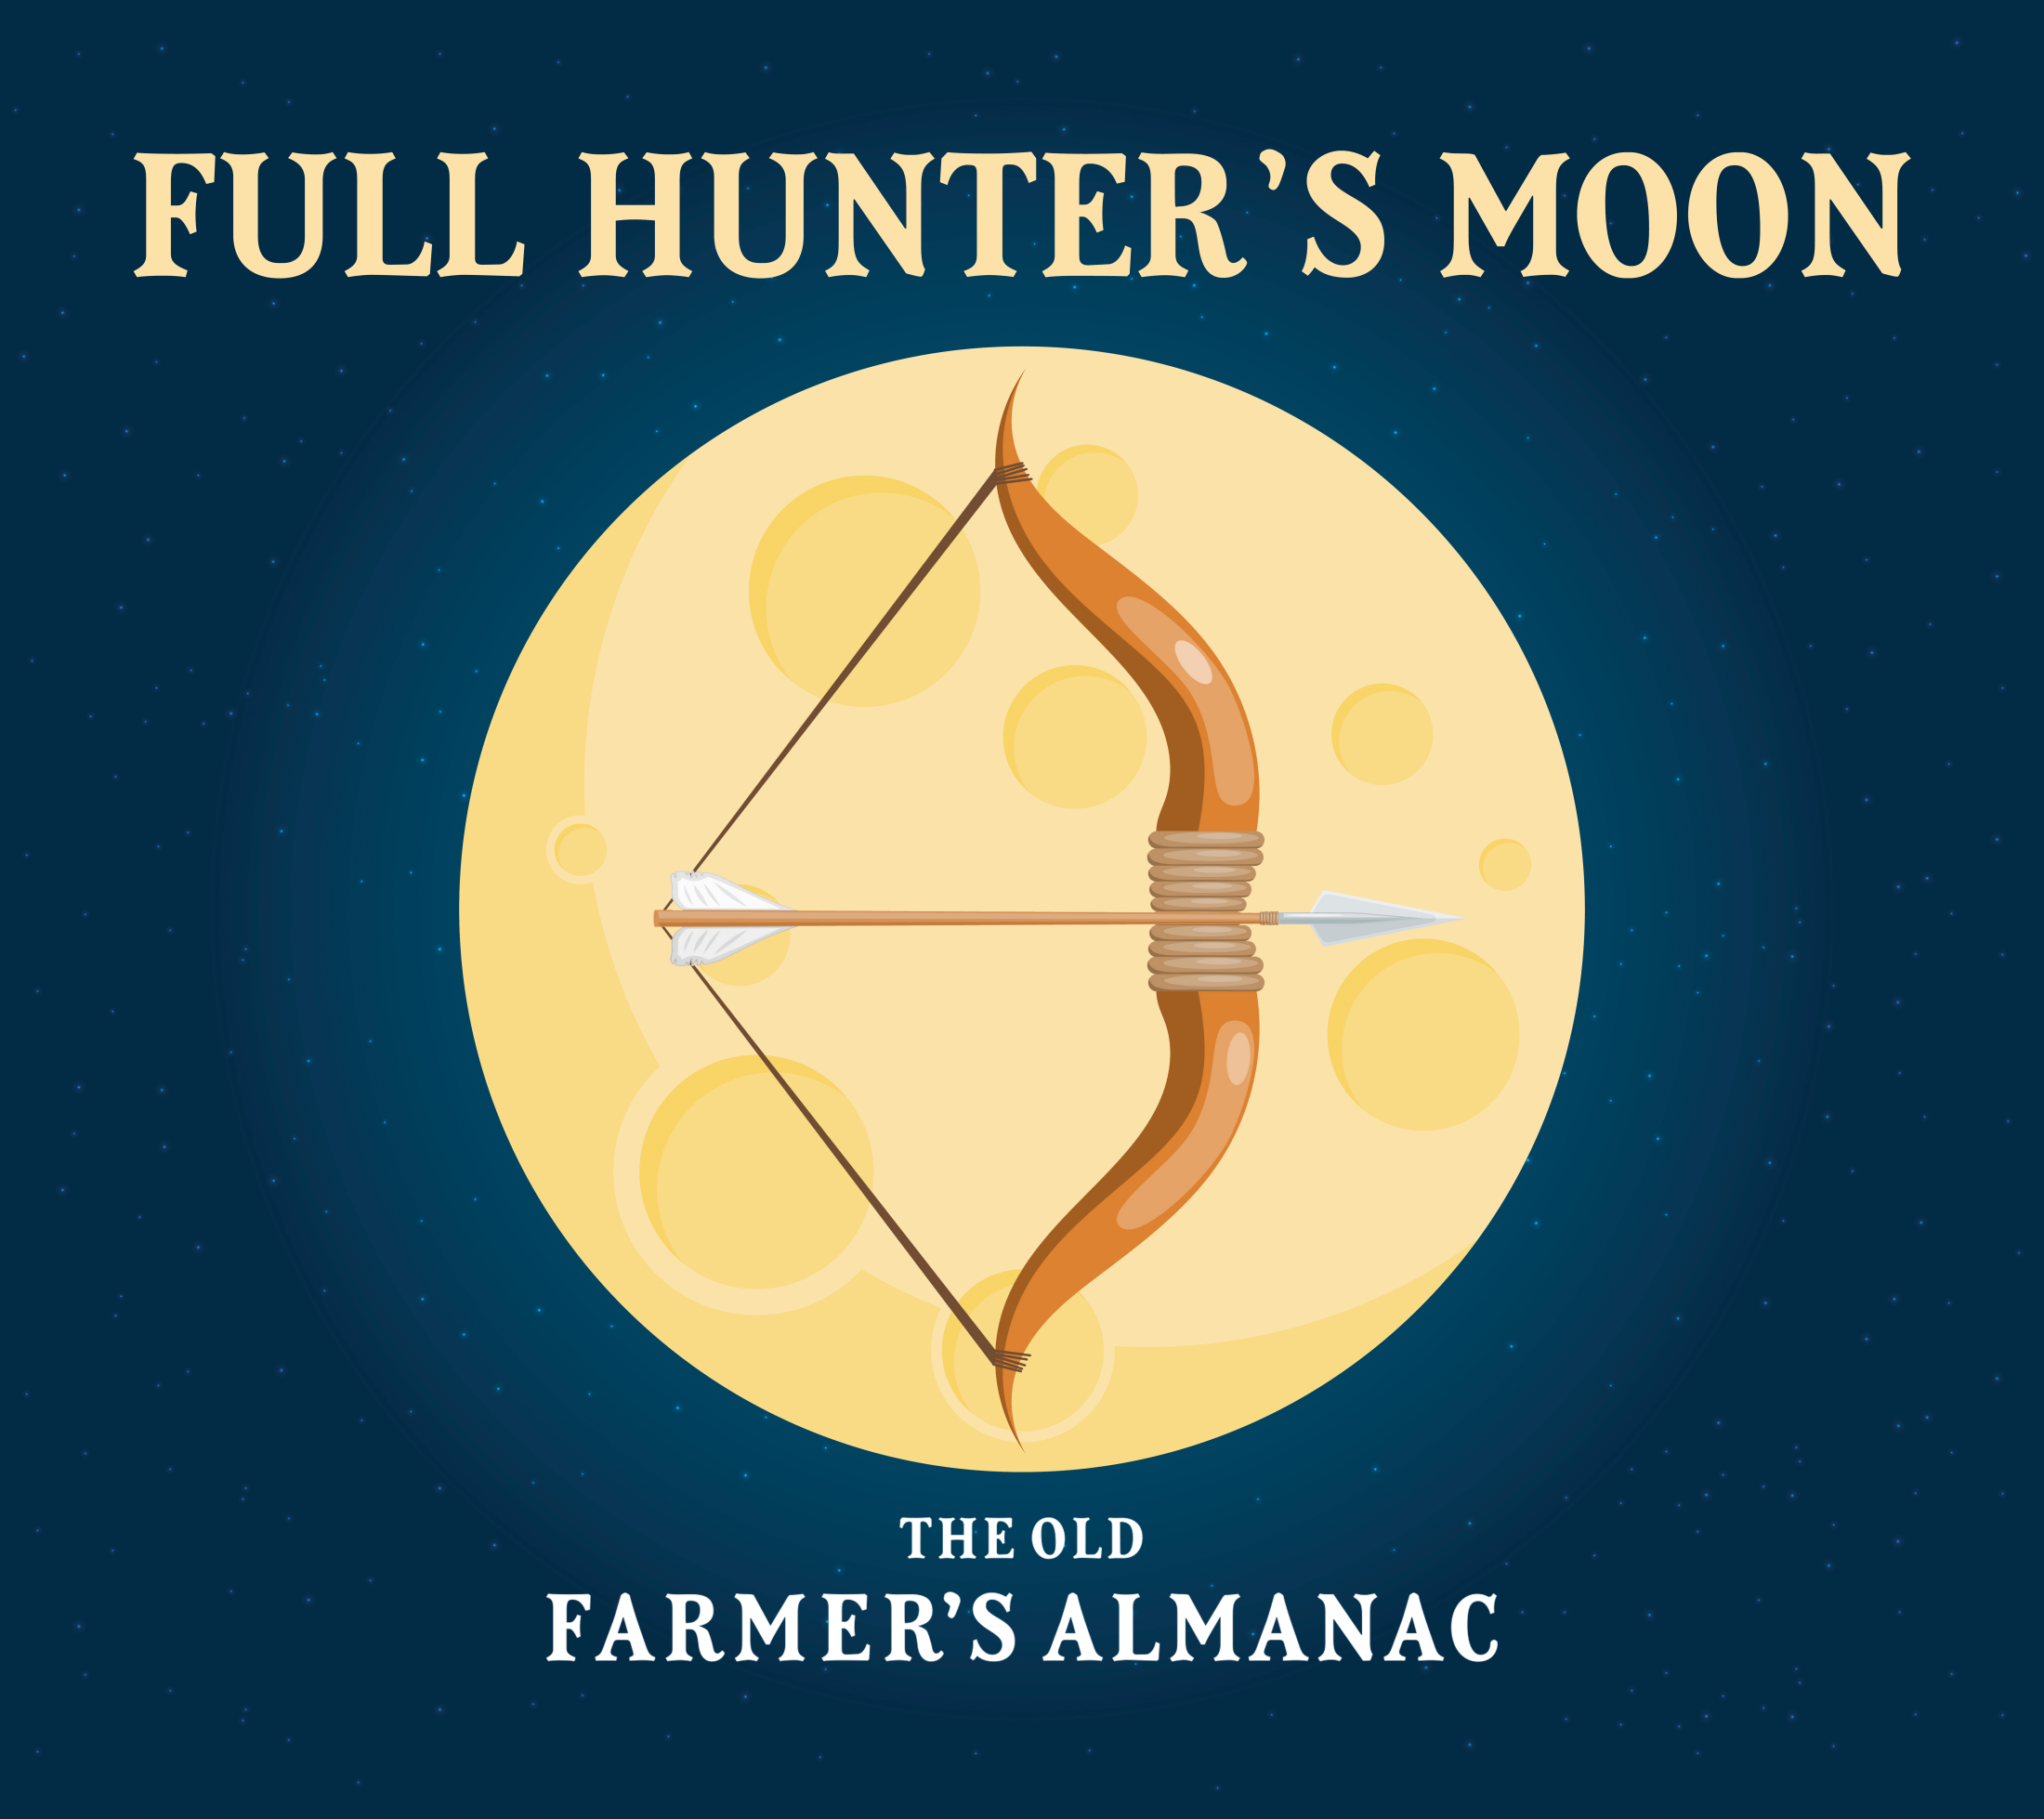 Full Moon In October 2020 Hunter S Blue Moon On Halloween The Old Farmer S Almanac